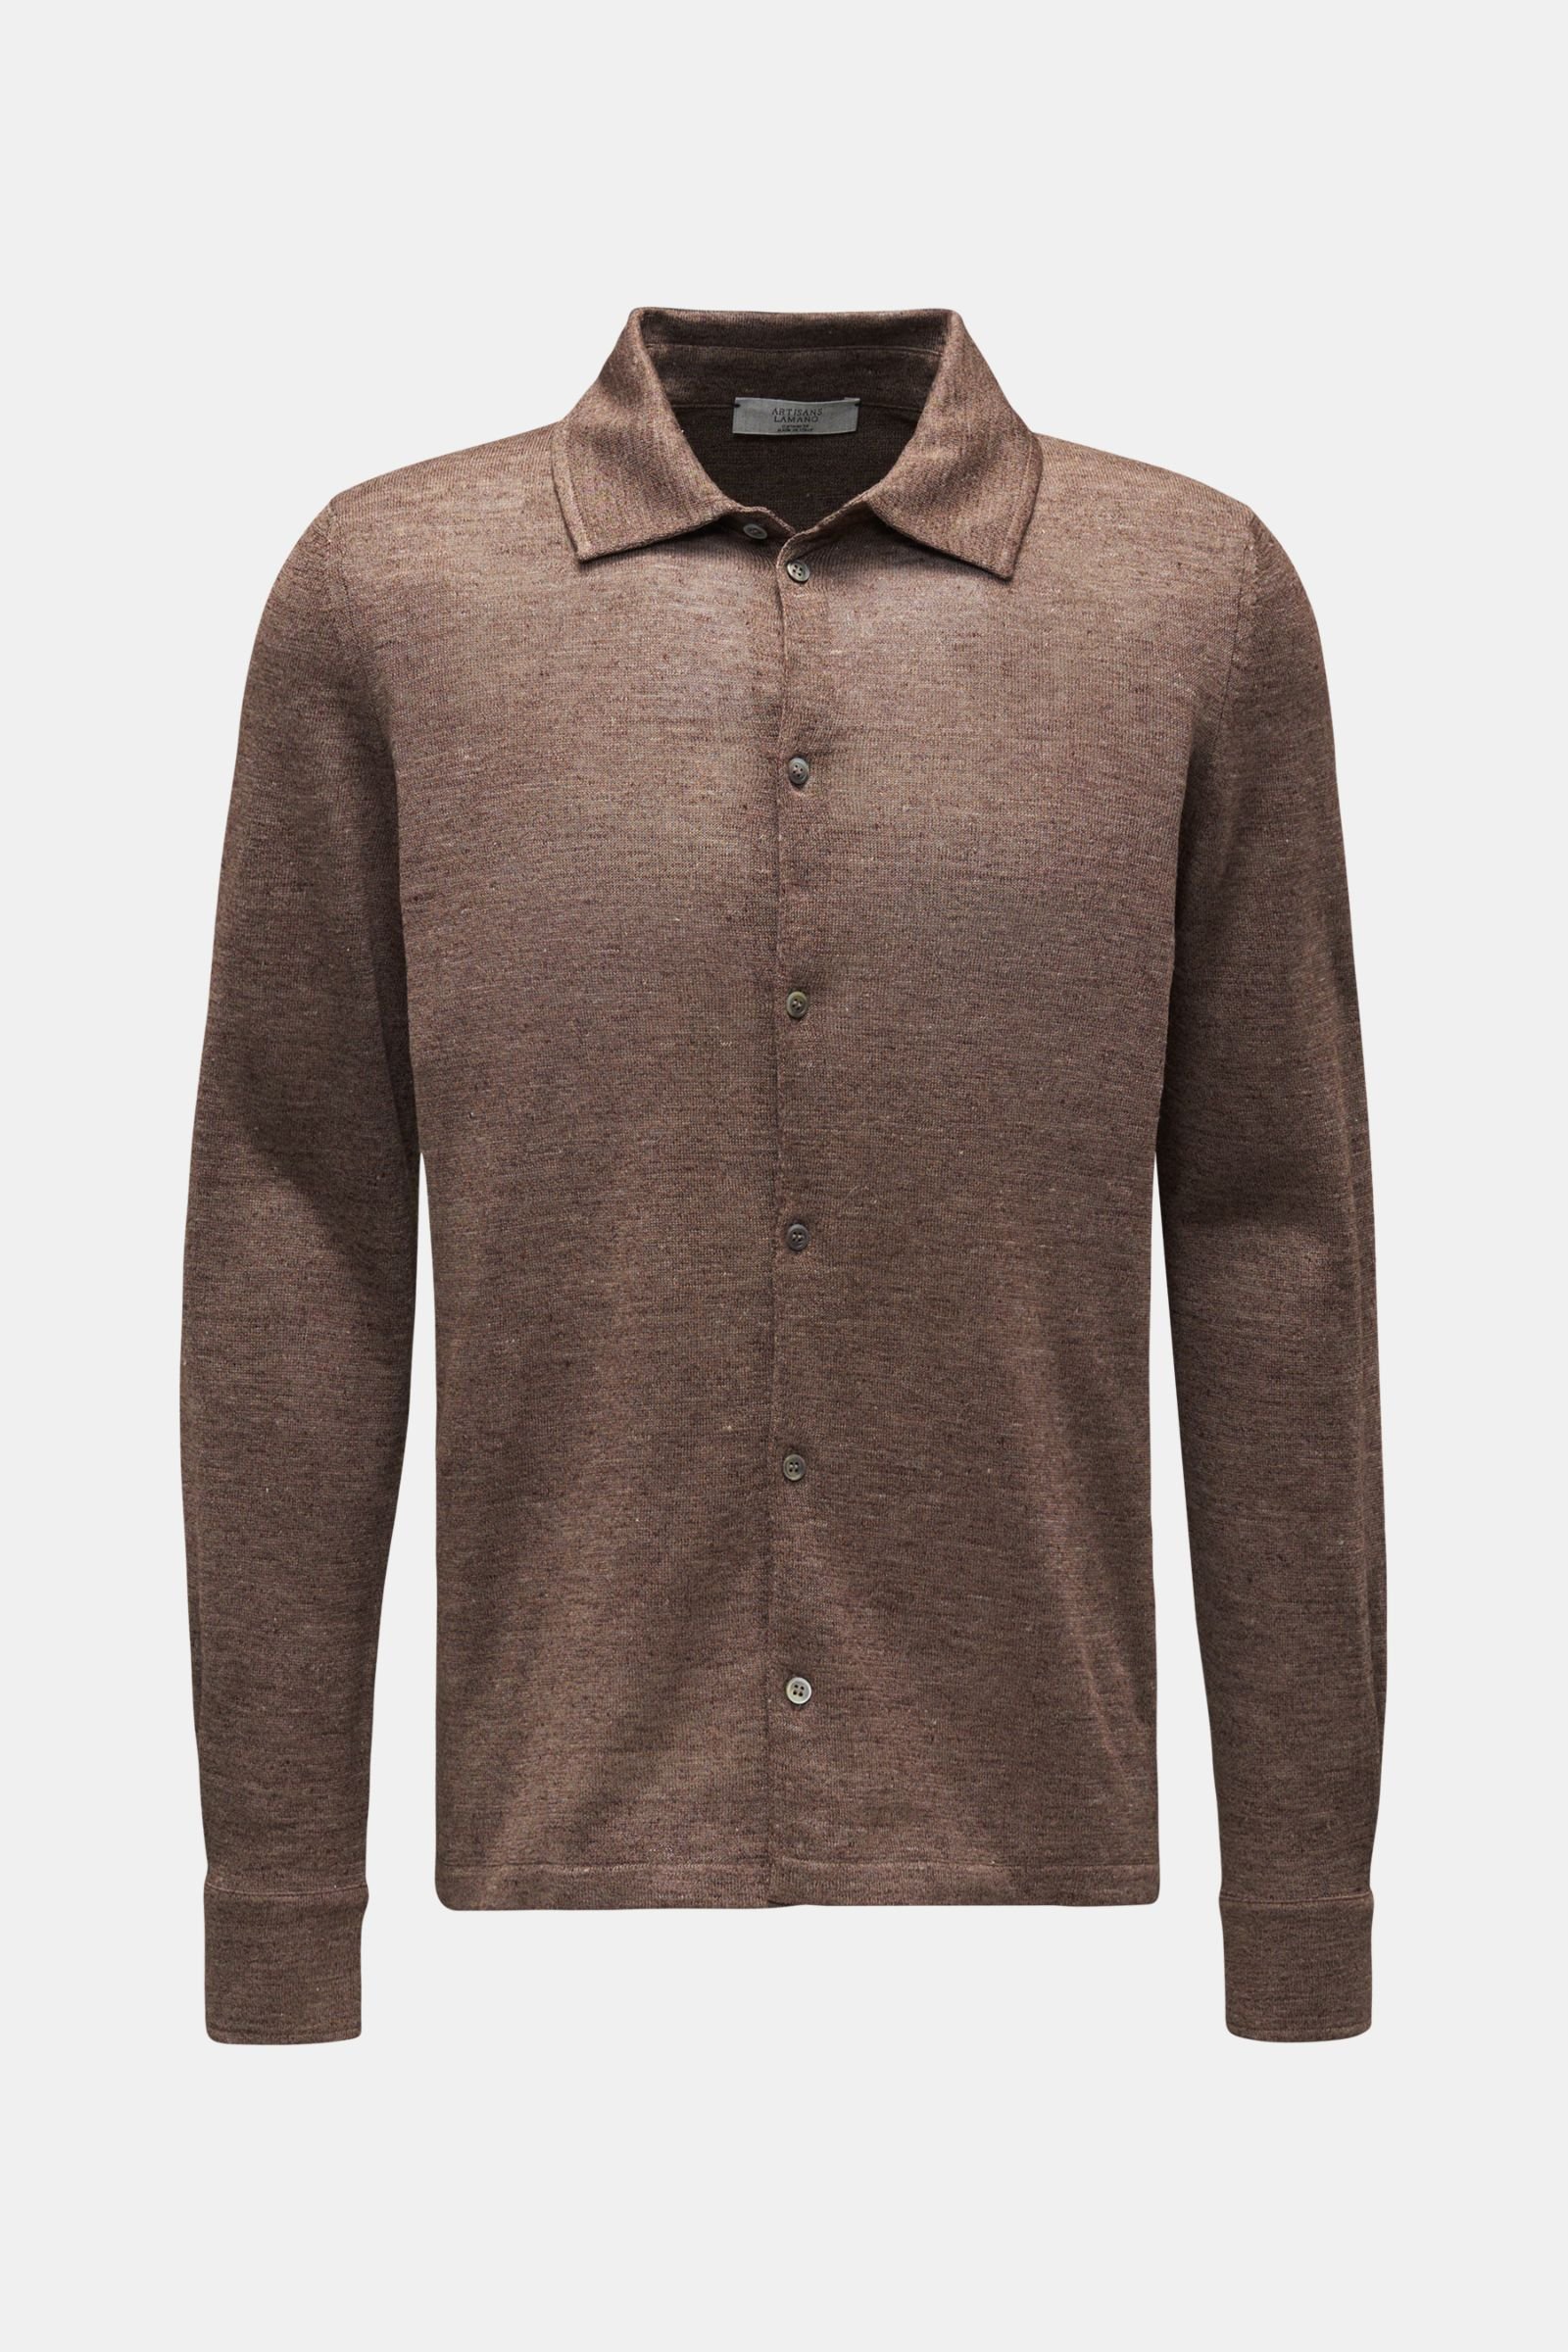 Knit shirt slim collar brown